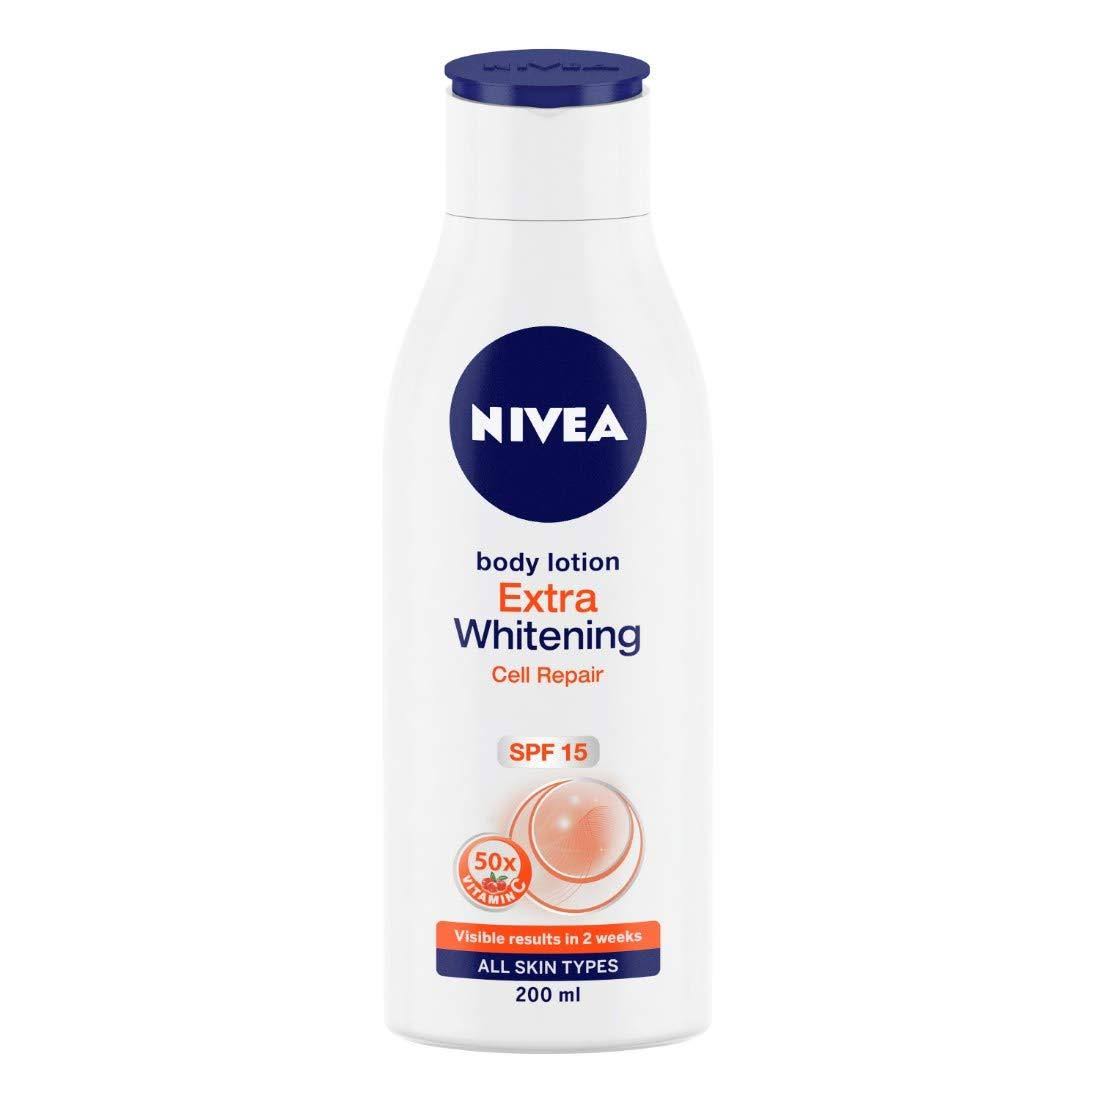 Nivea Body Lotion, Extra Whitening Cell Repair, SPF 15 & 50x Vitamin C, 200ml